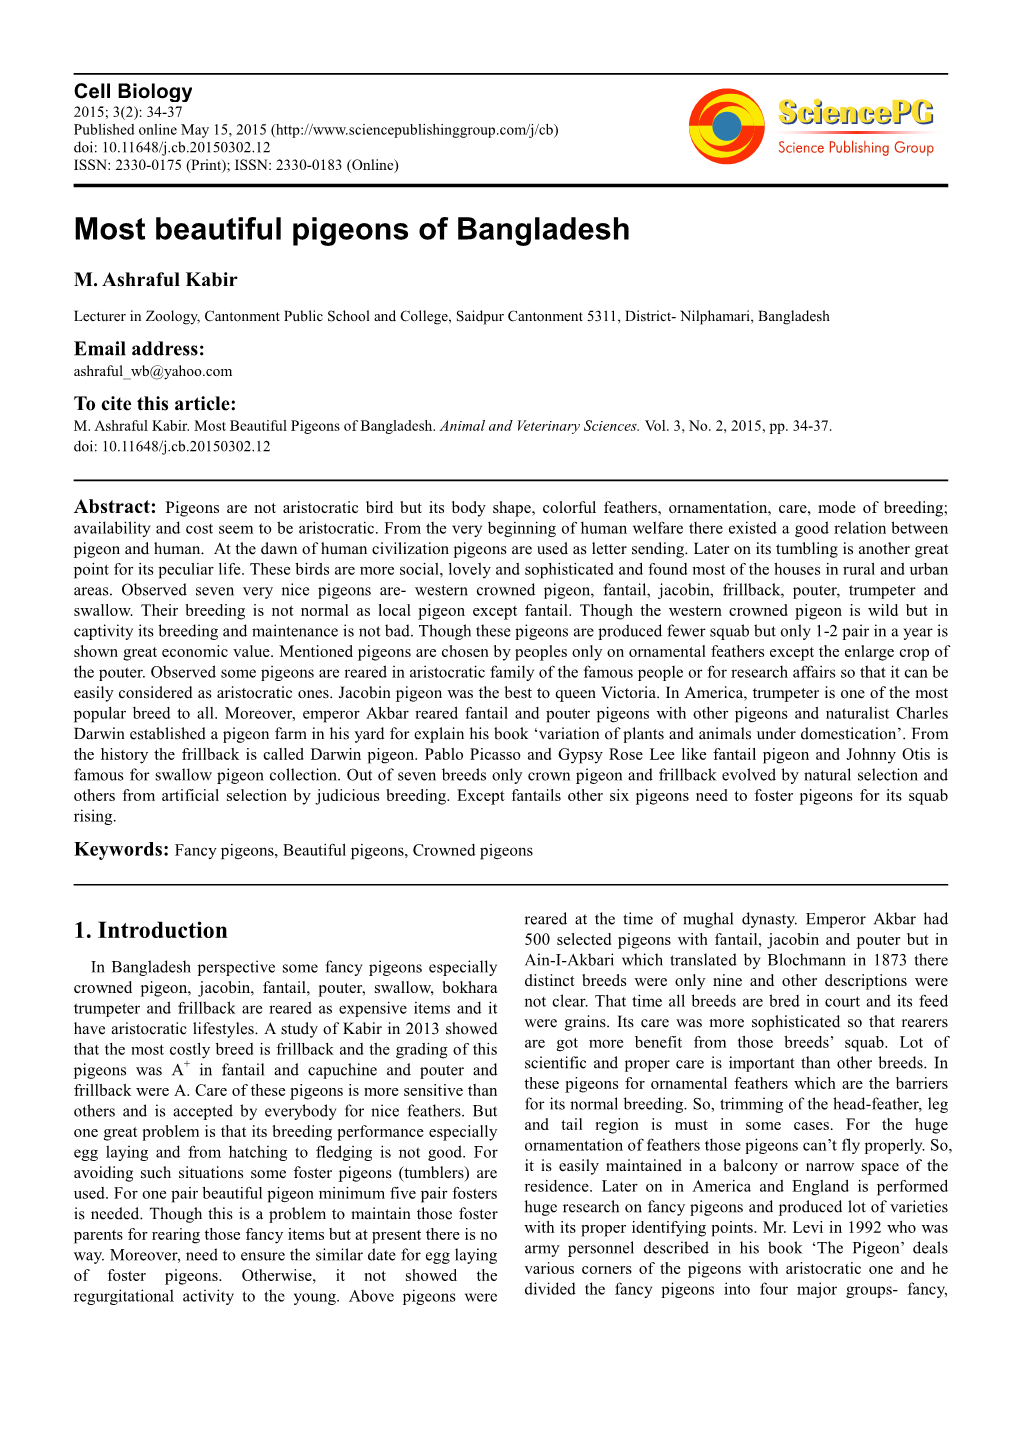 Most Beautiful Pigeons of Bangladesh